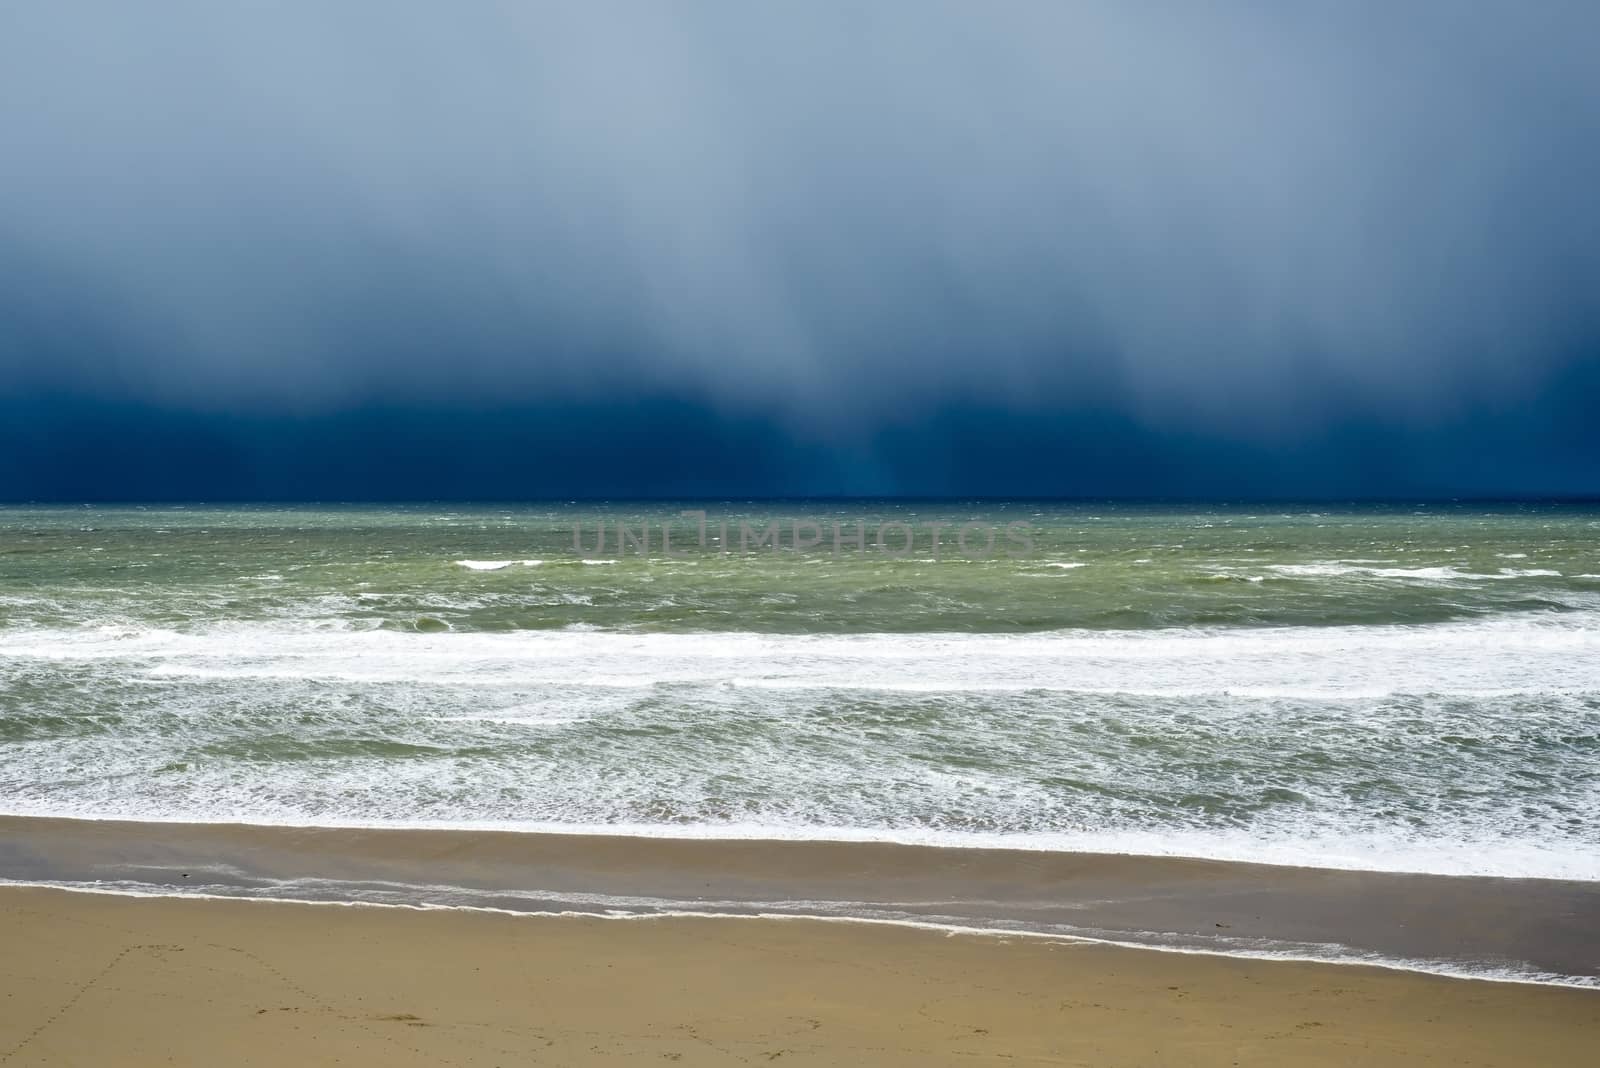 winter rain storm approaching beach by morrbyte